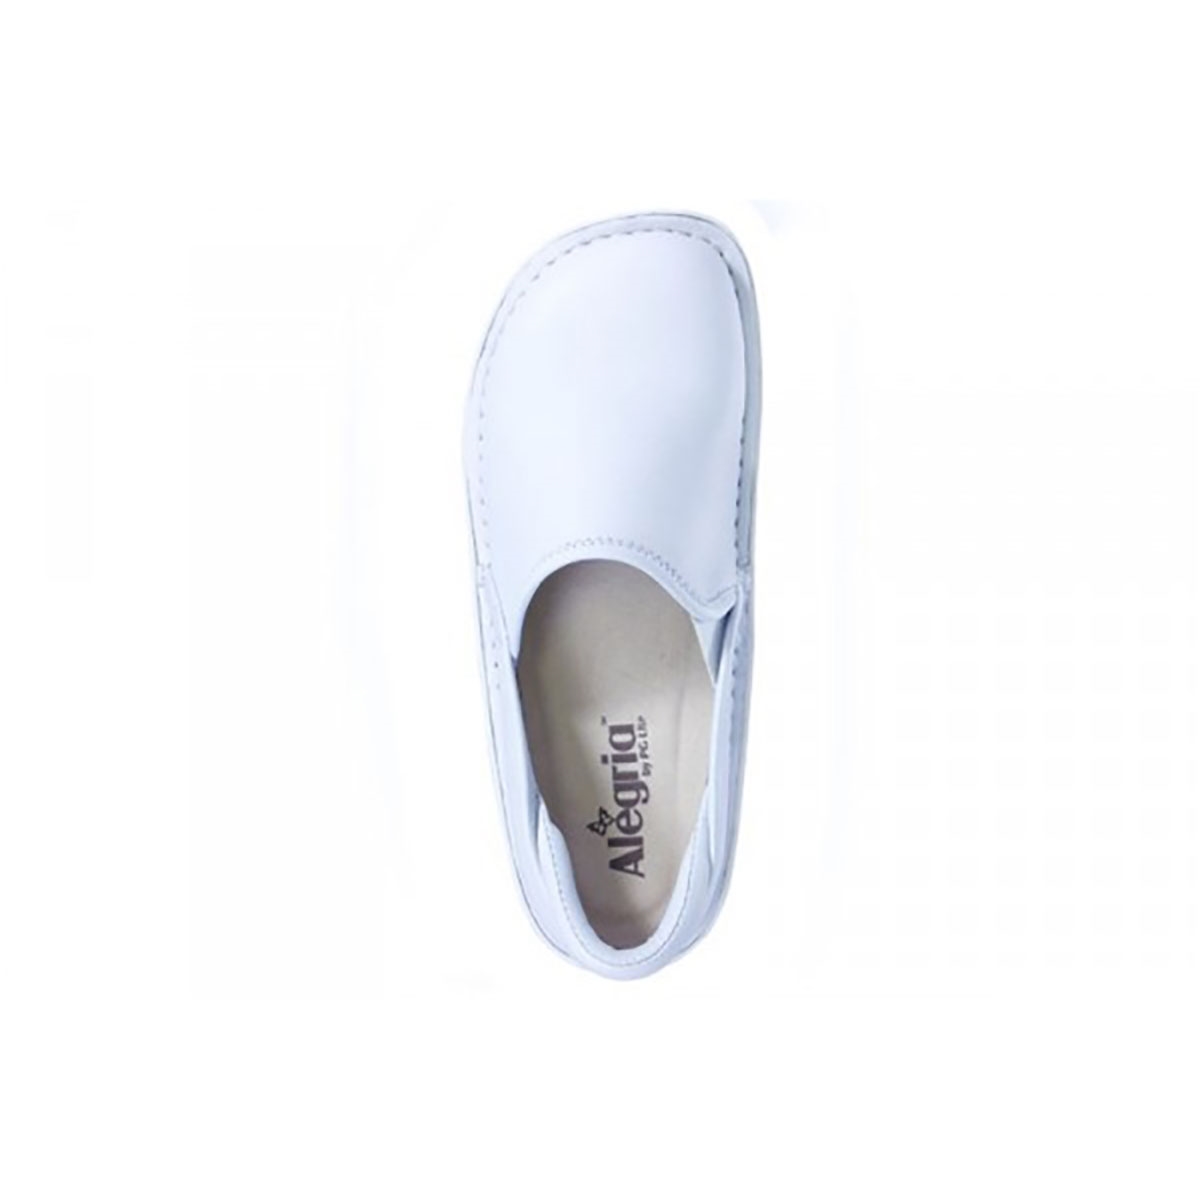 Alegria Shoes - Debra White Leather